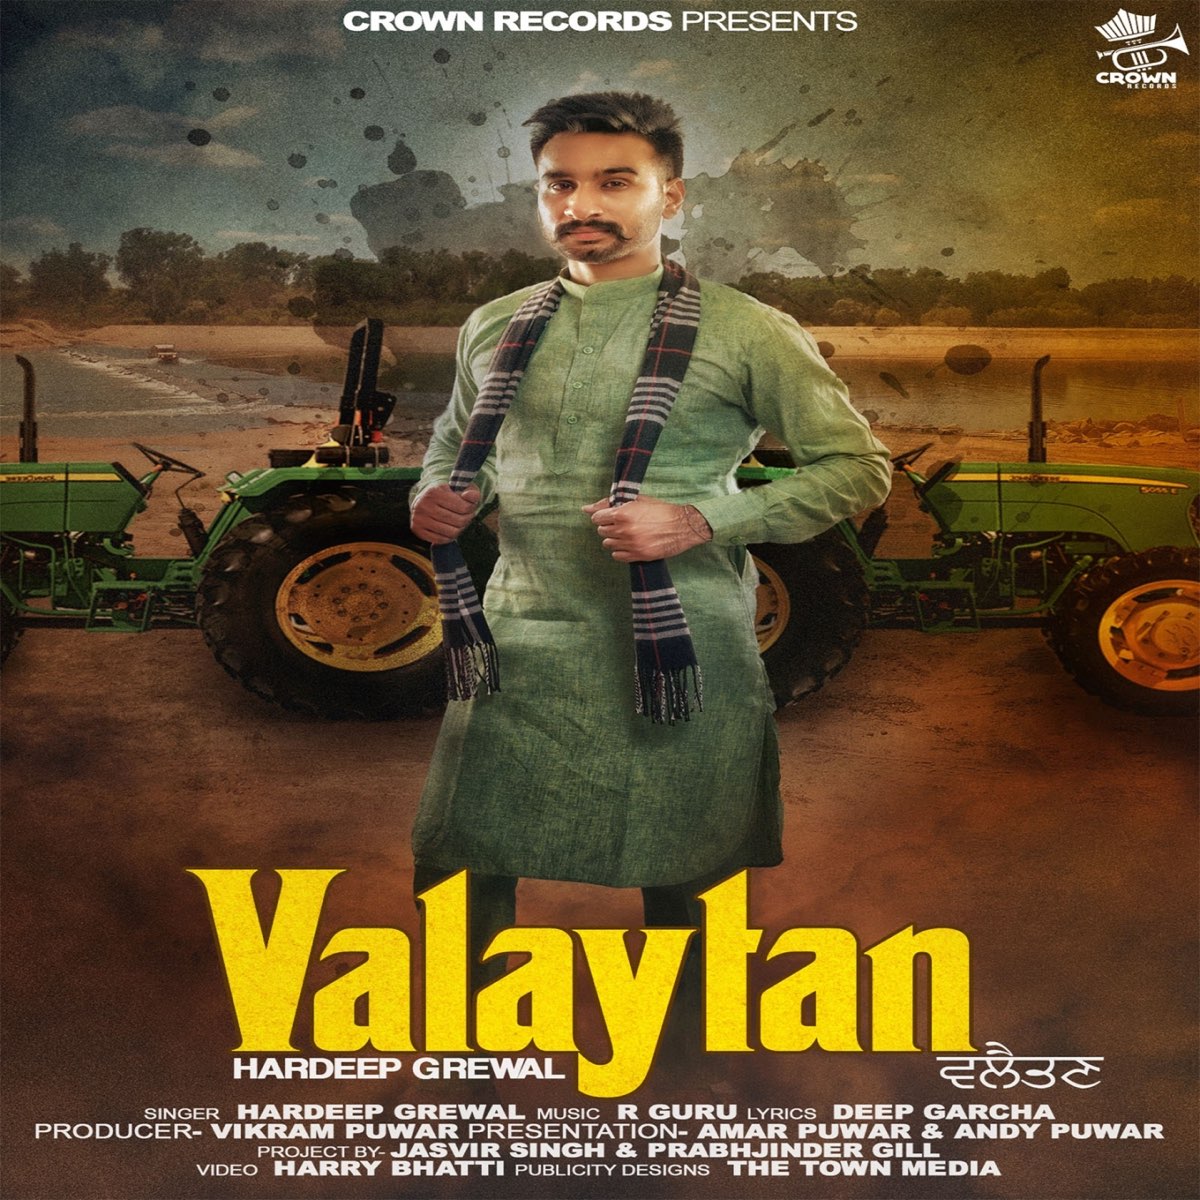 Valaytan - Single - Album by Hardeep Grewal - Apple Music